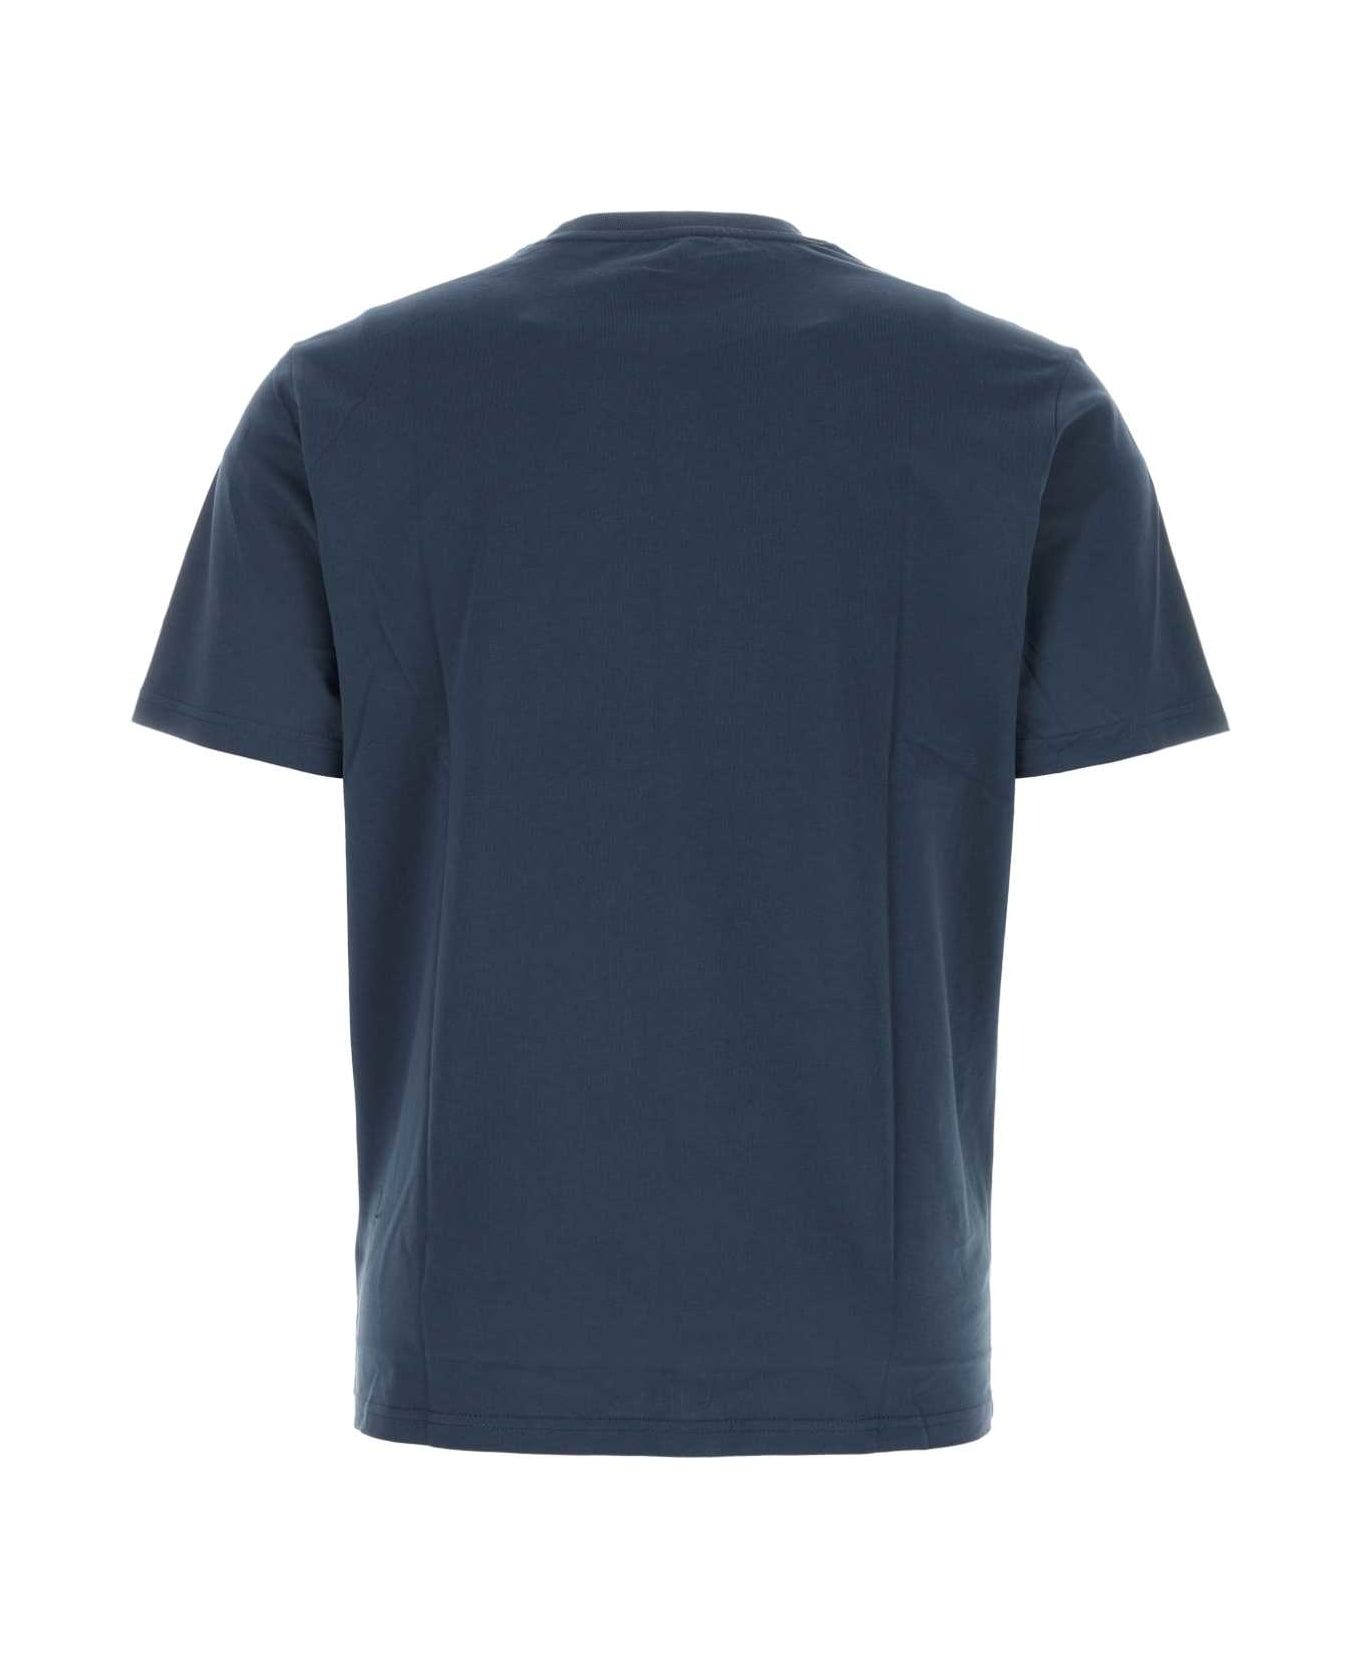 Dickies Navy Blue Cotton Mapleton T-shirt - DARKBROWN